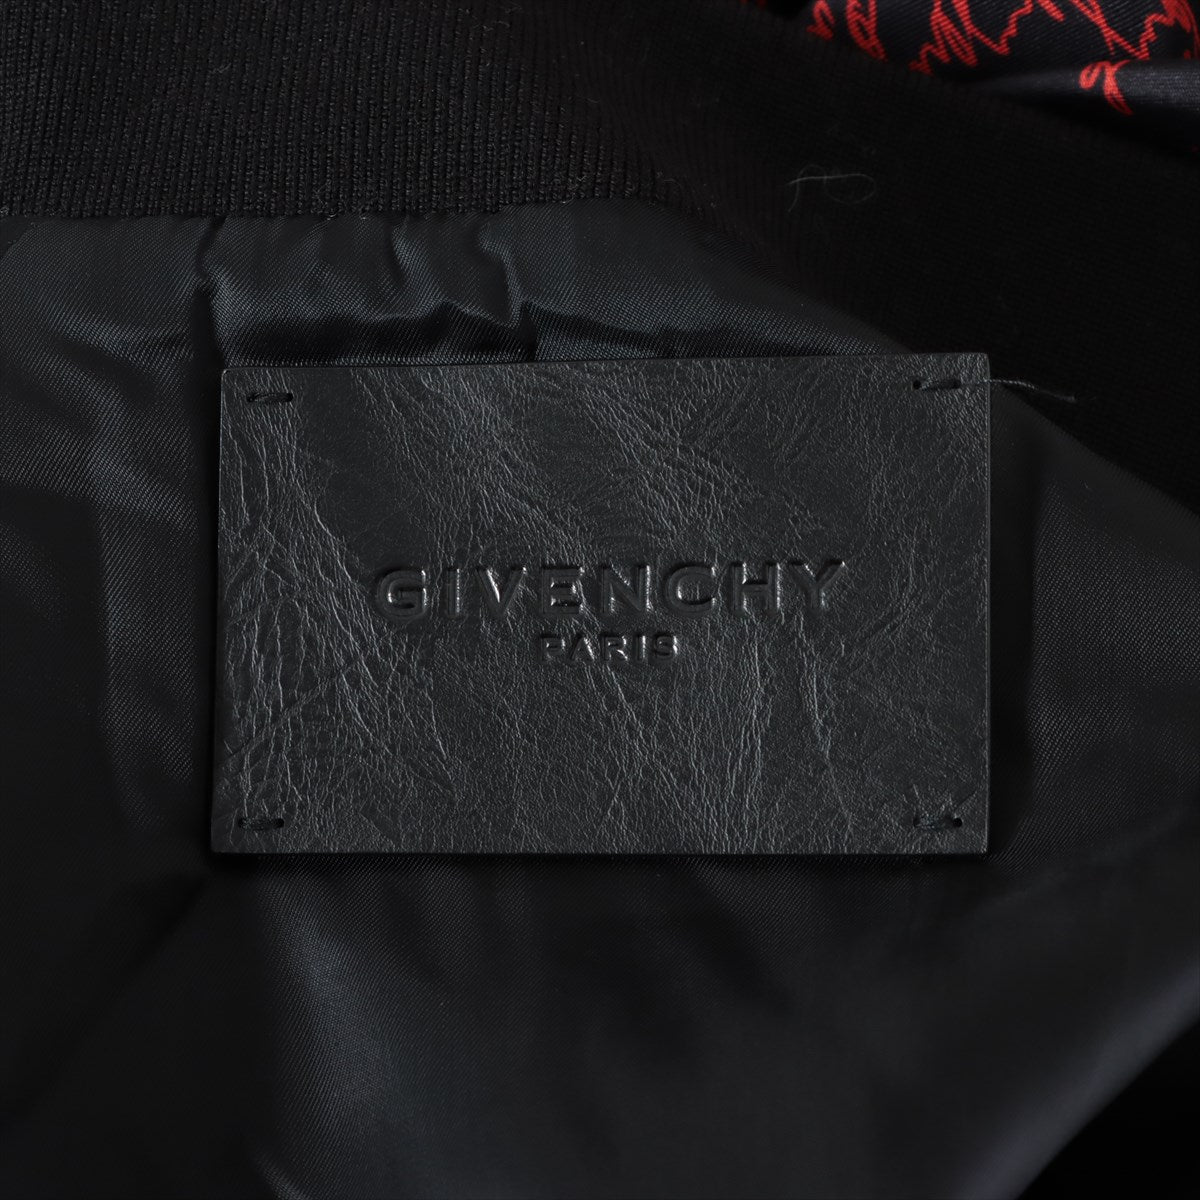 Givenchy Cotton & silk Jacket 46 Men's Black x red  BM005E10YT